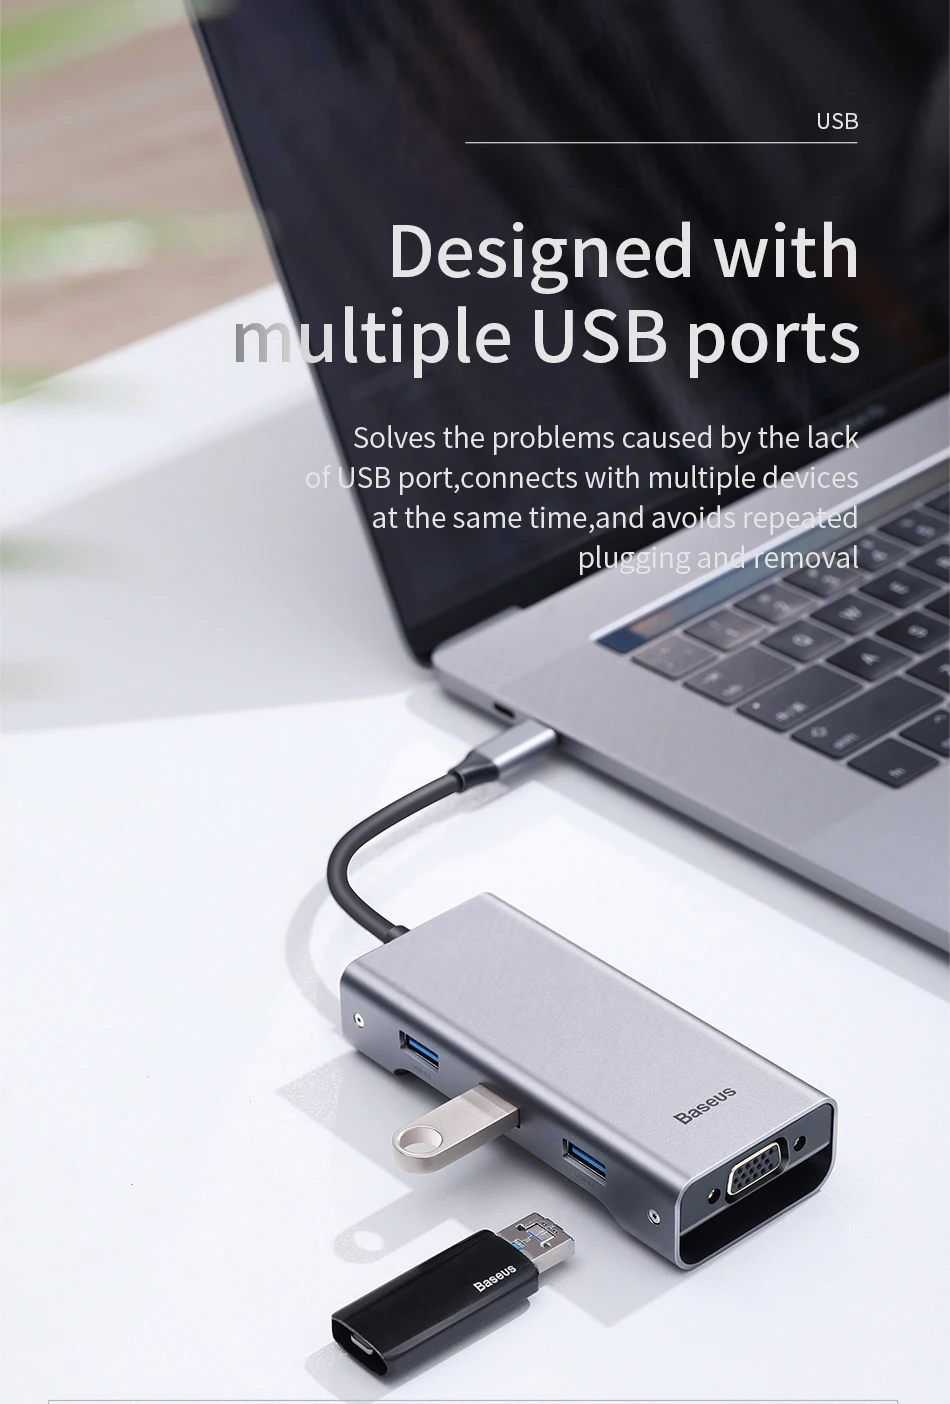 Baseus Square Desk Type-C Multi-functional usb c hub for MacBook